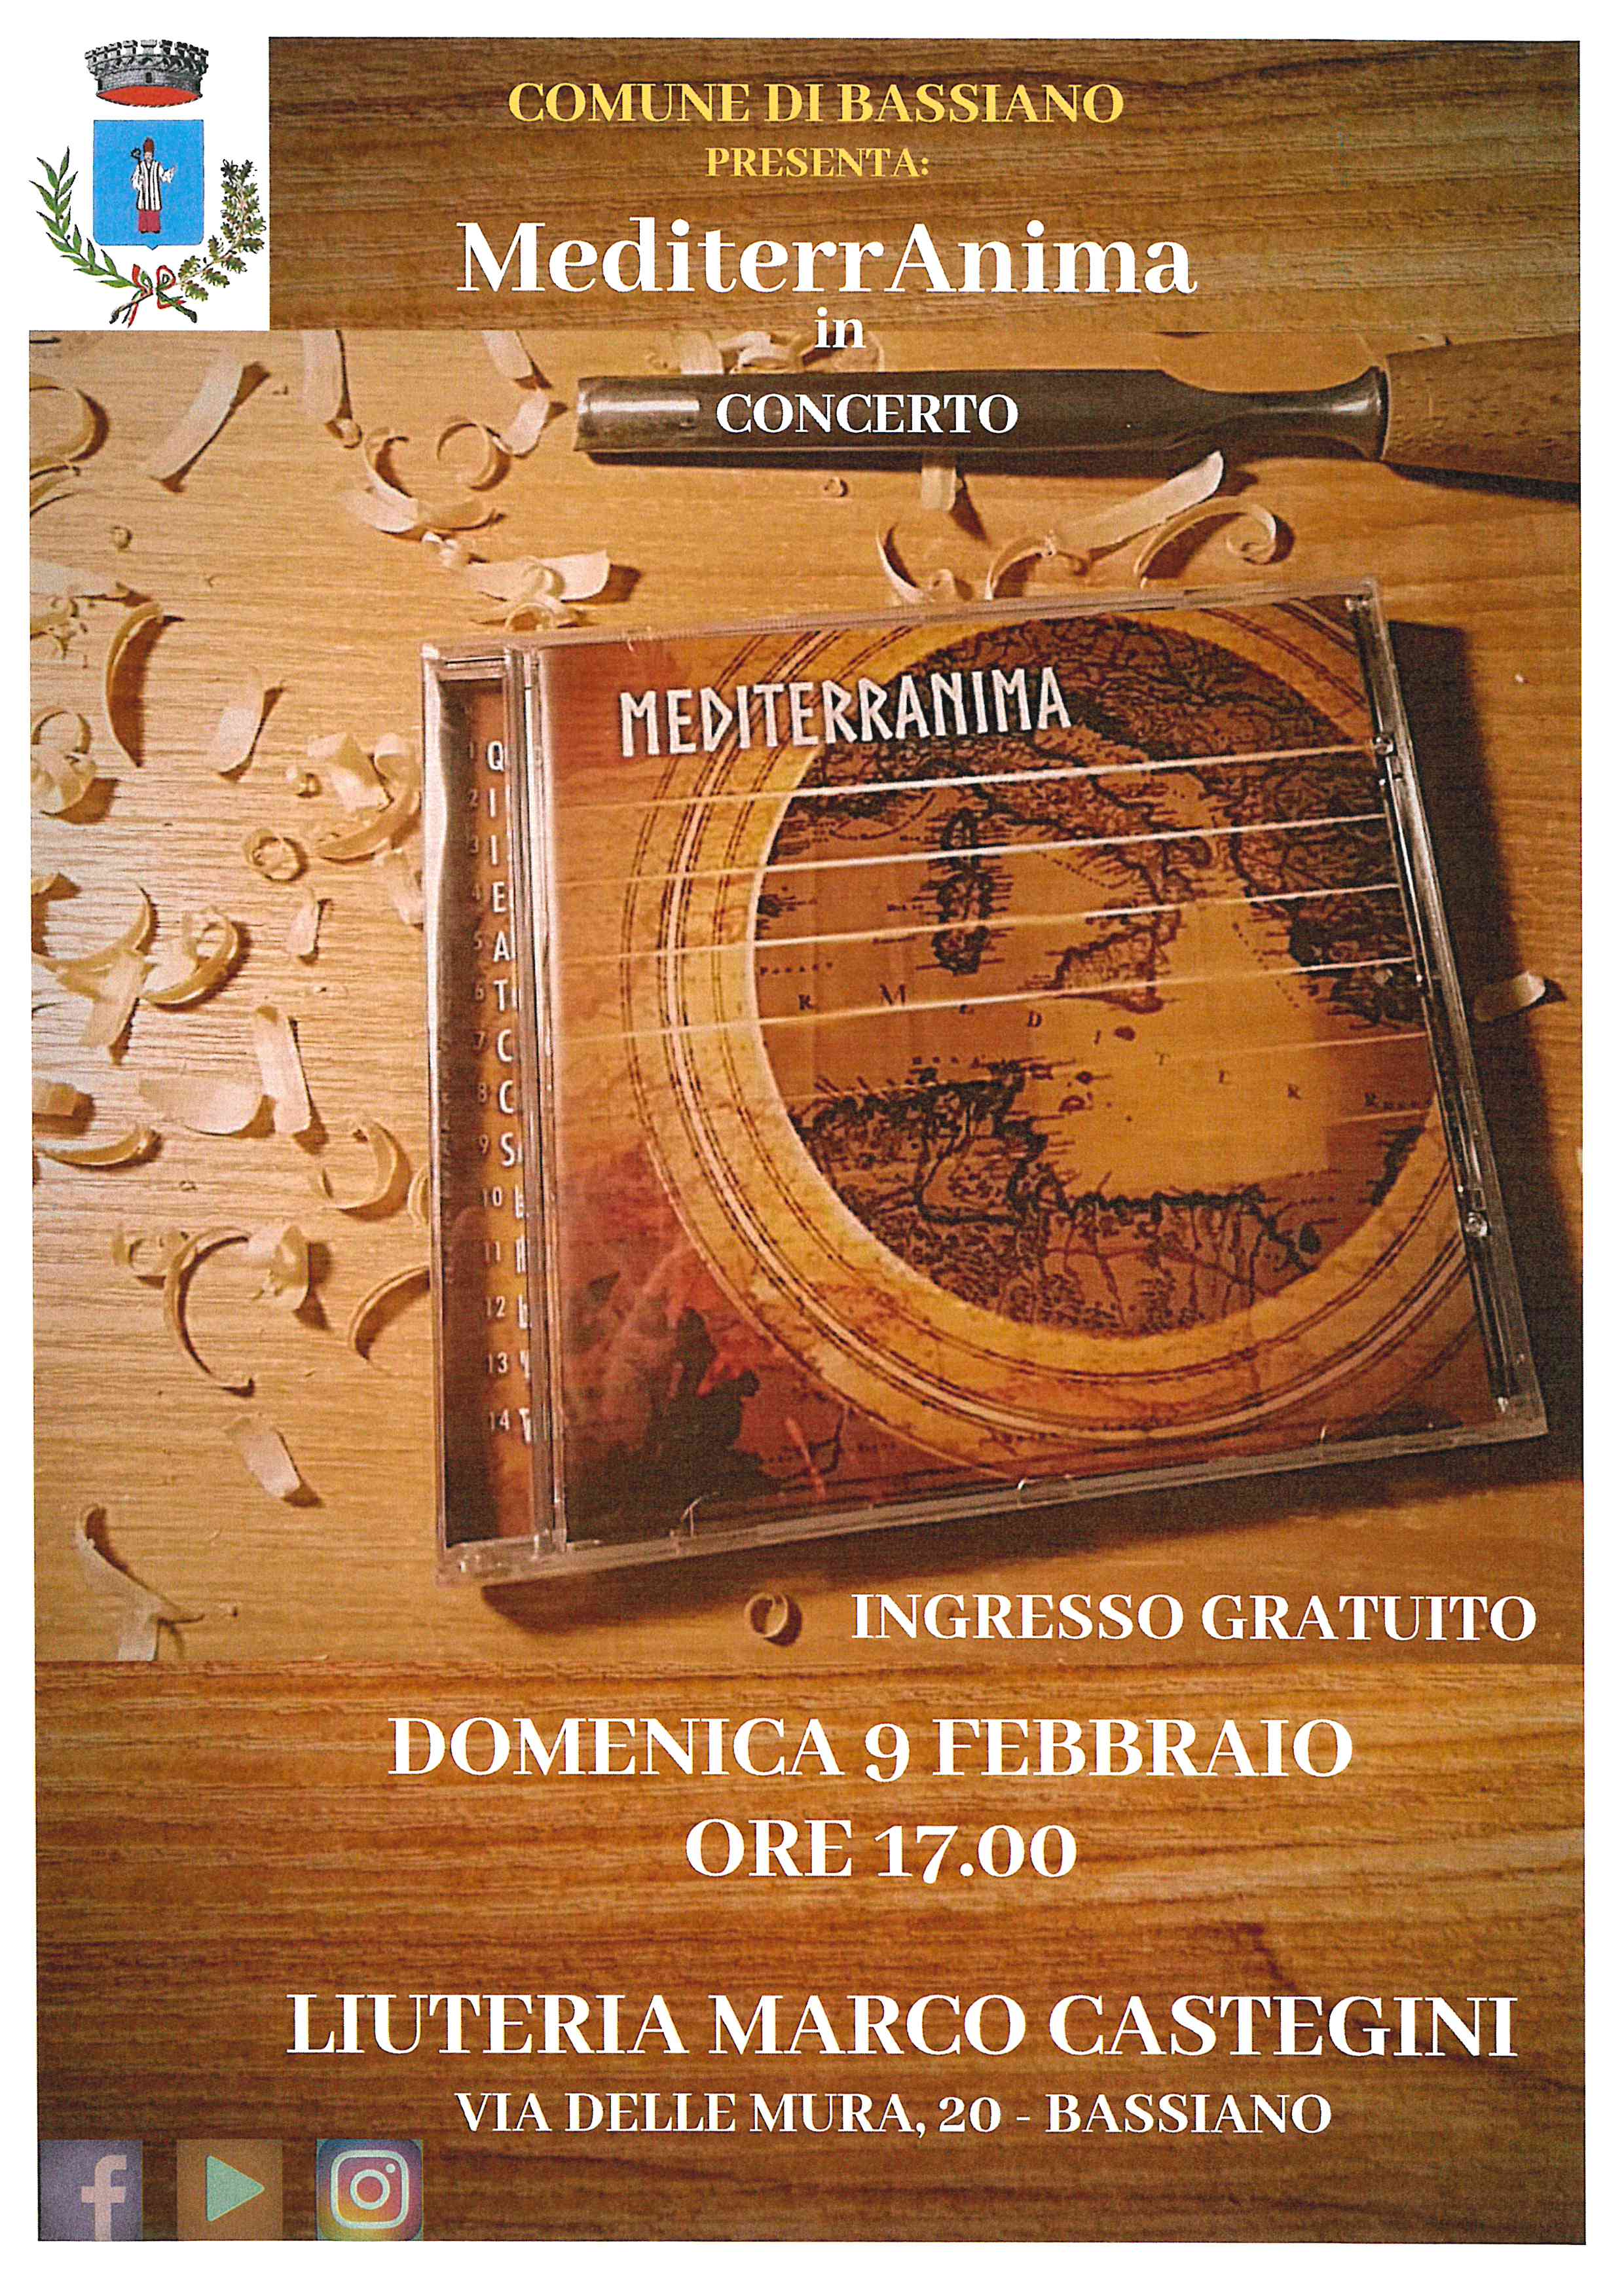 mediterranima-in-concerto